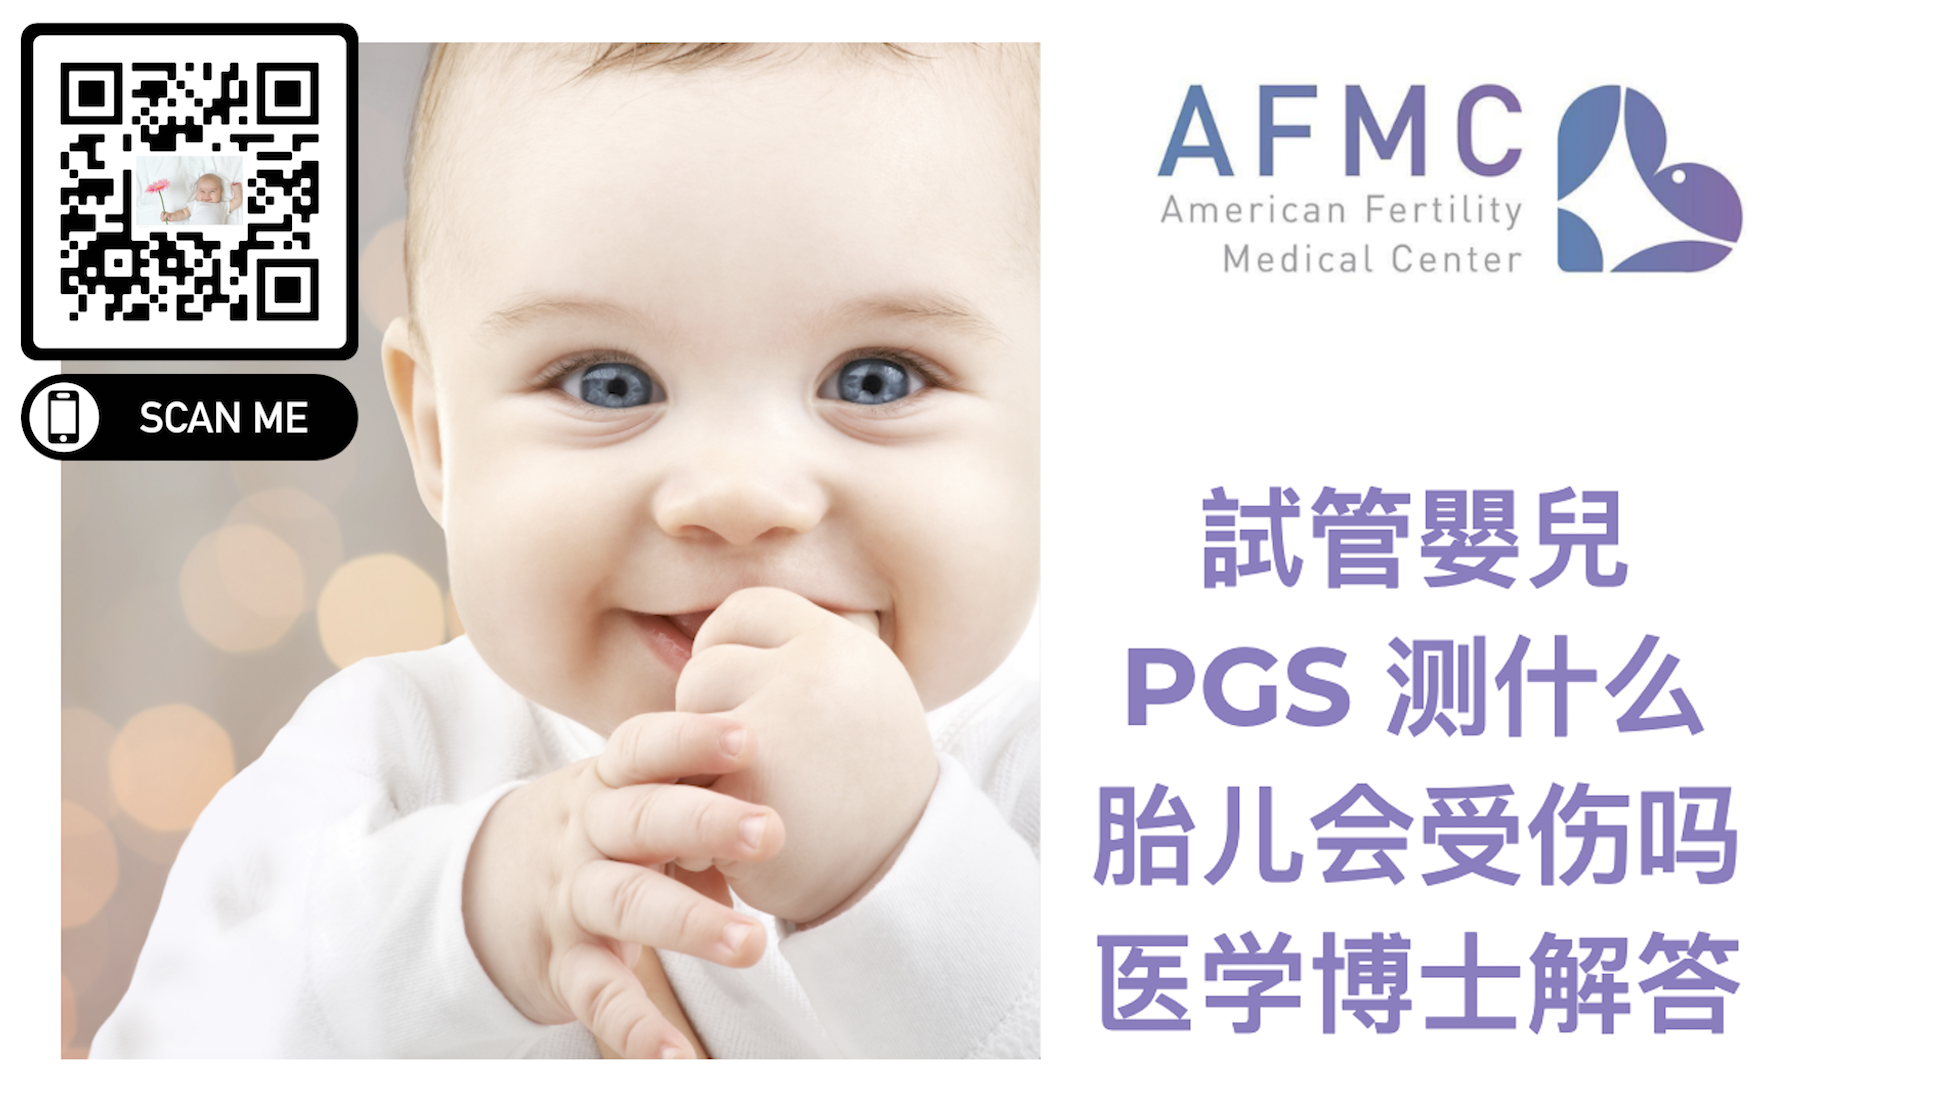 AFMC 试管婴儿 Photo